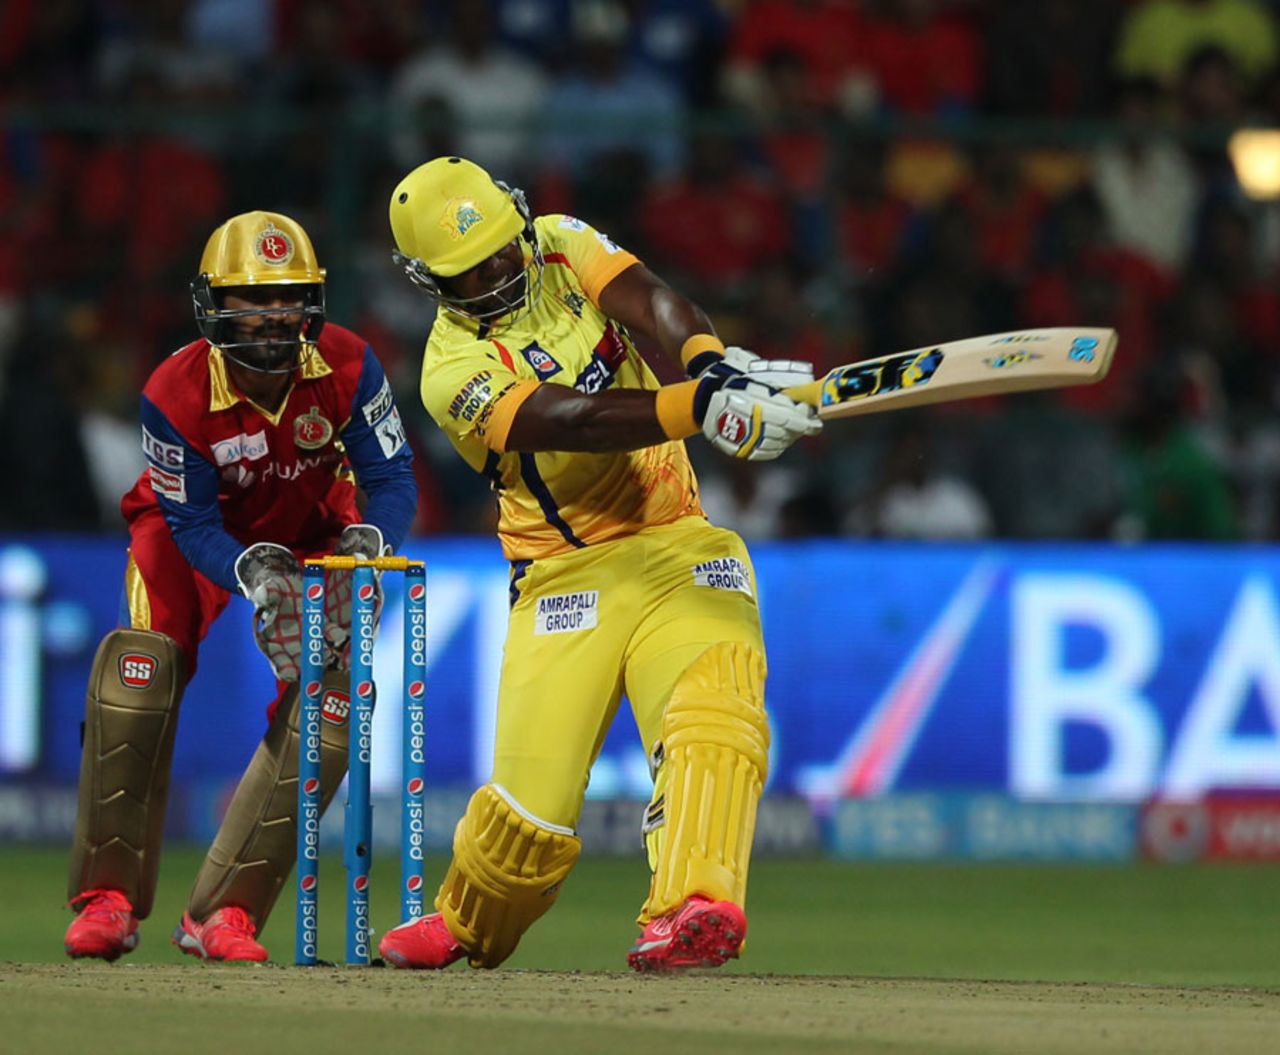 Dwayne Smith blasted 39, Royal Challengers Bangalore v Chennai Super Kings, IPL 2015, Bangalore, April 22, 2015